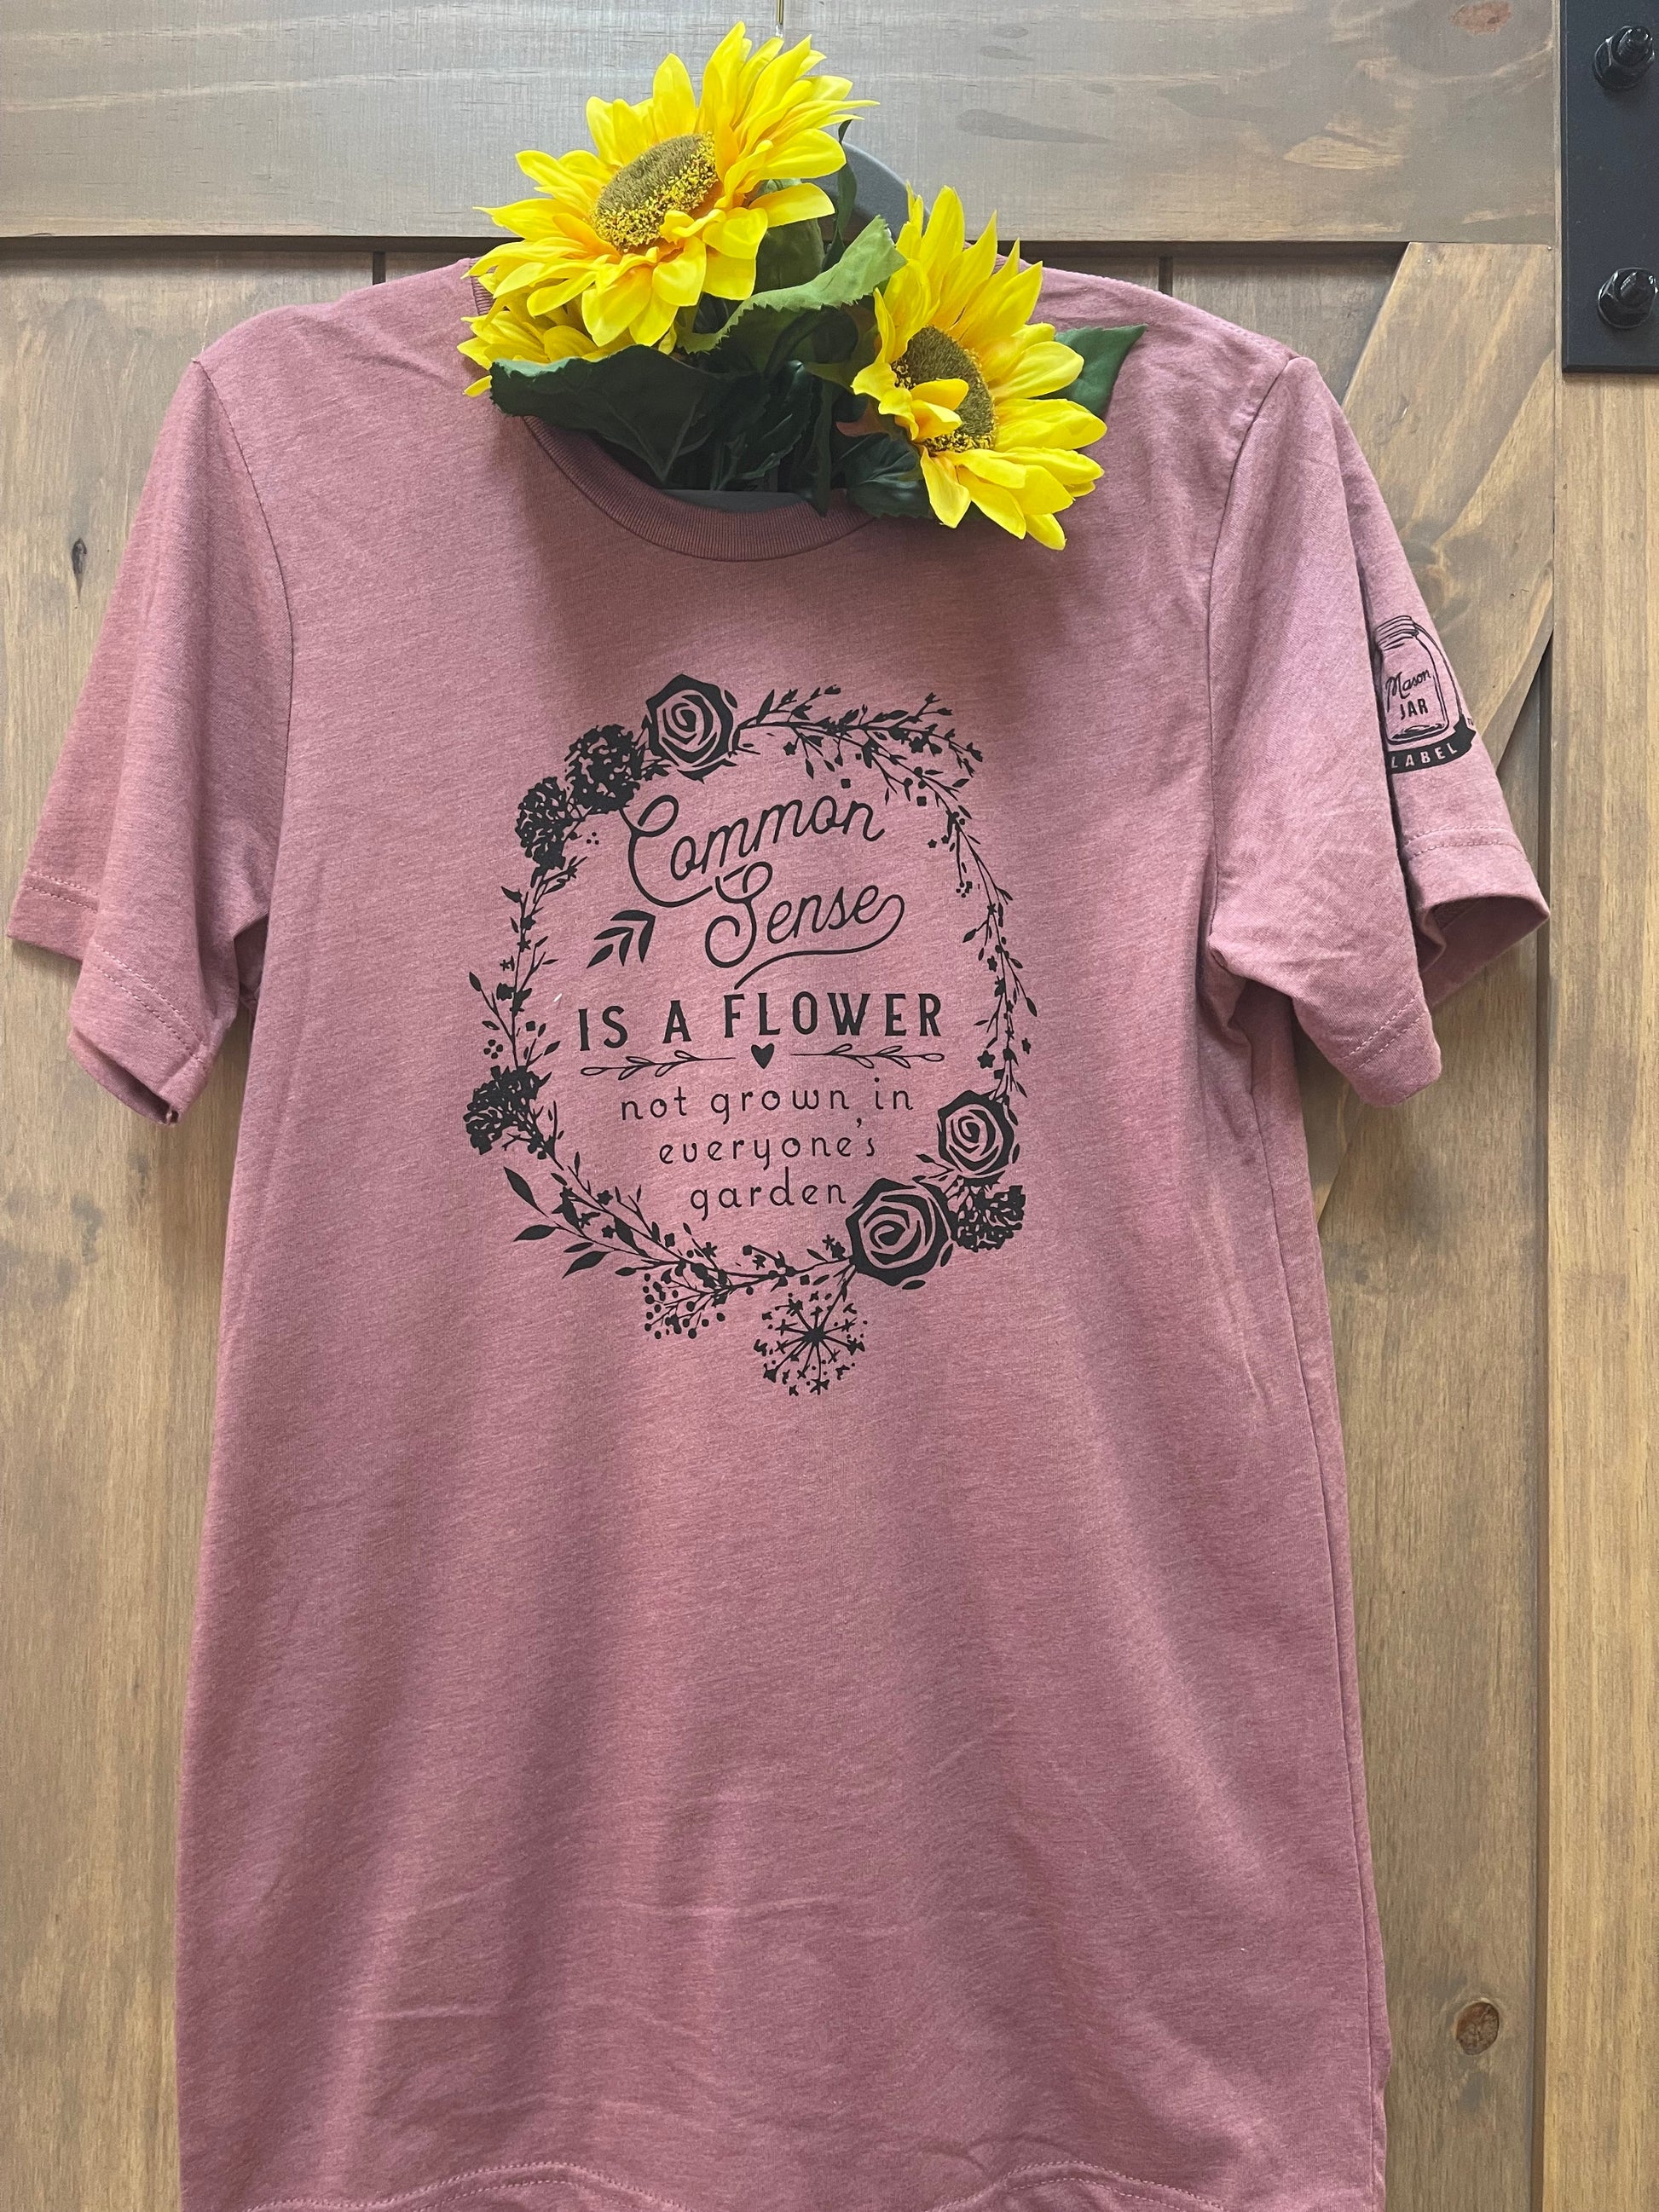 Common Sense Shirt - Premium Shirt from Mason Jar Label - Just $23! Shop now at Three Blessed Gems